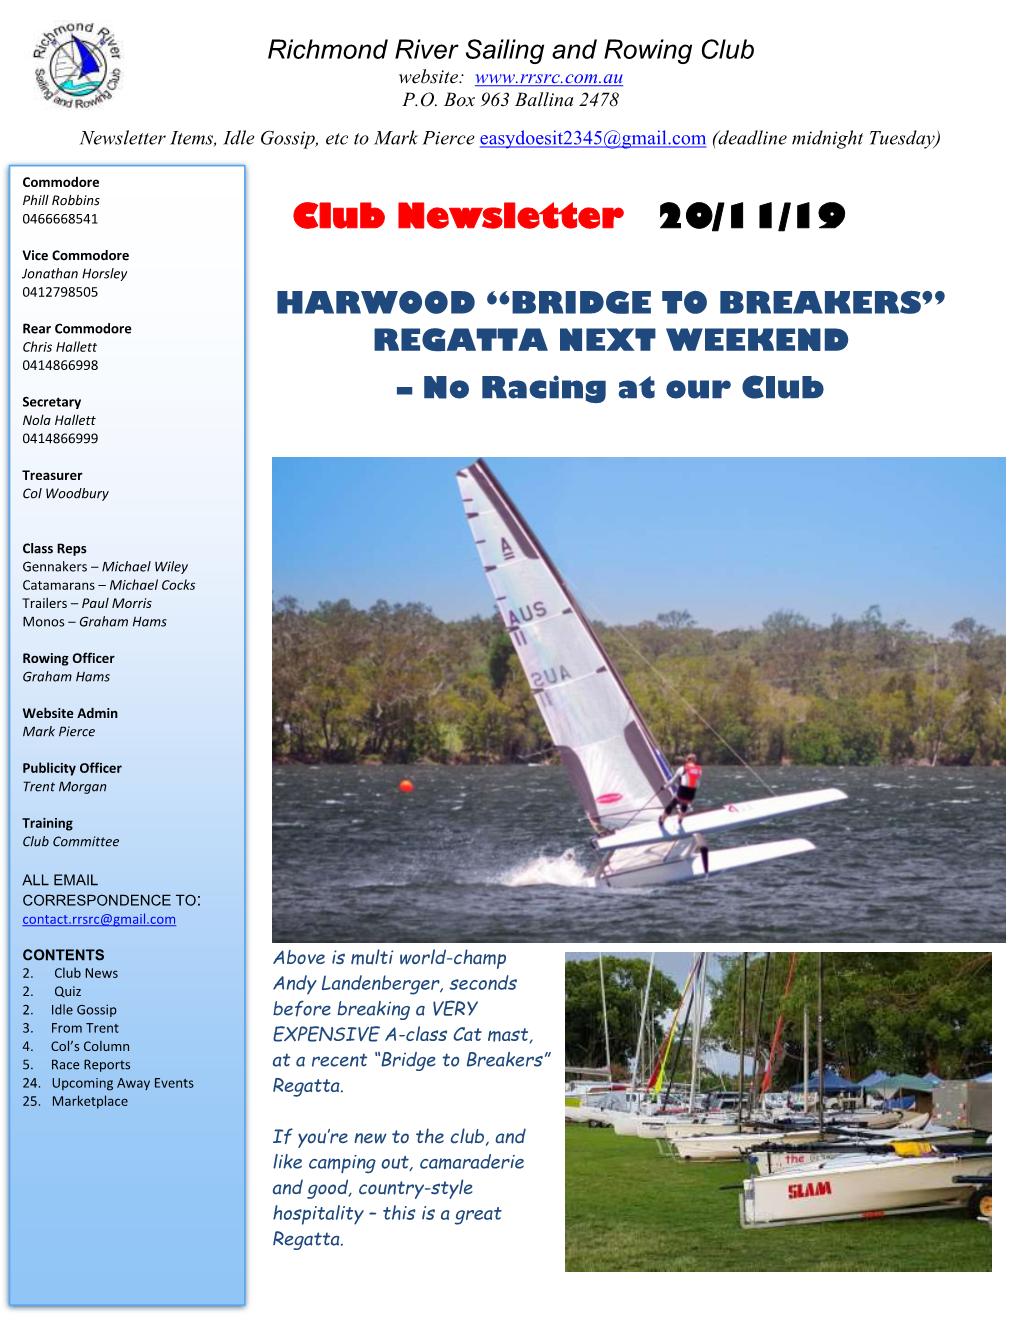 Club Newsletter 20/11/19